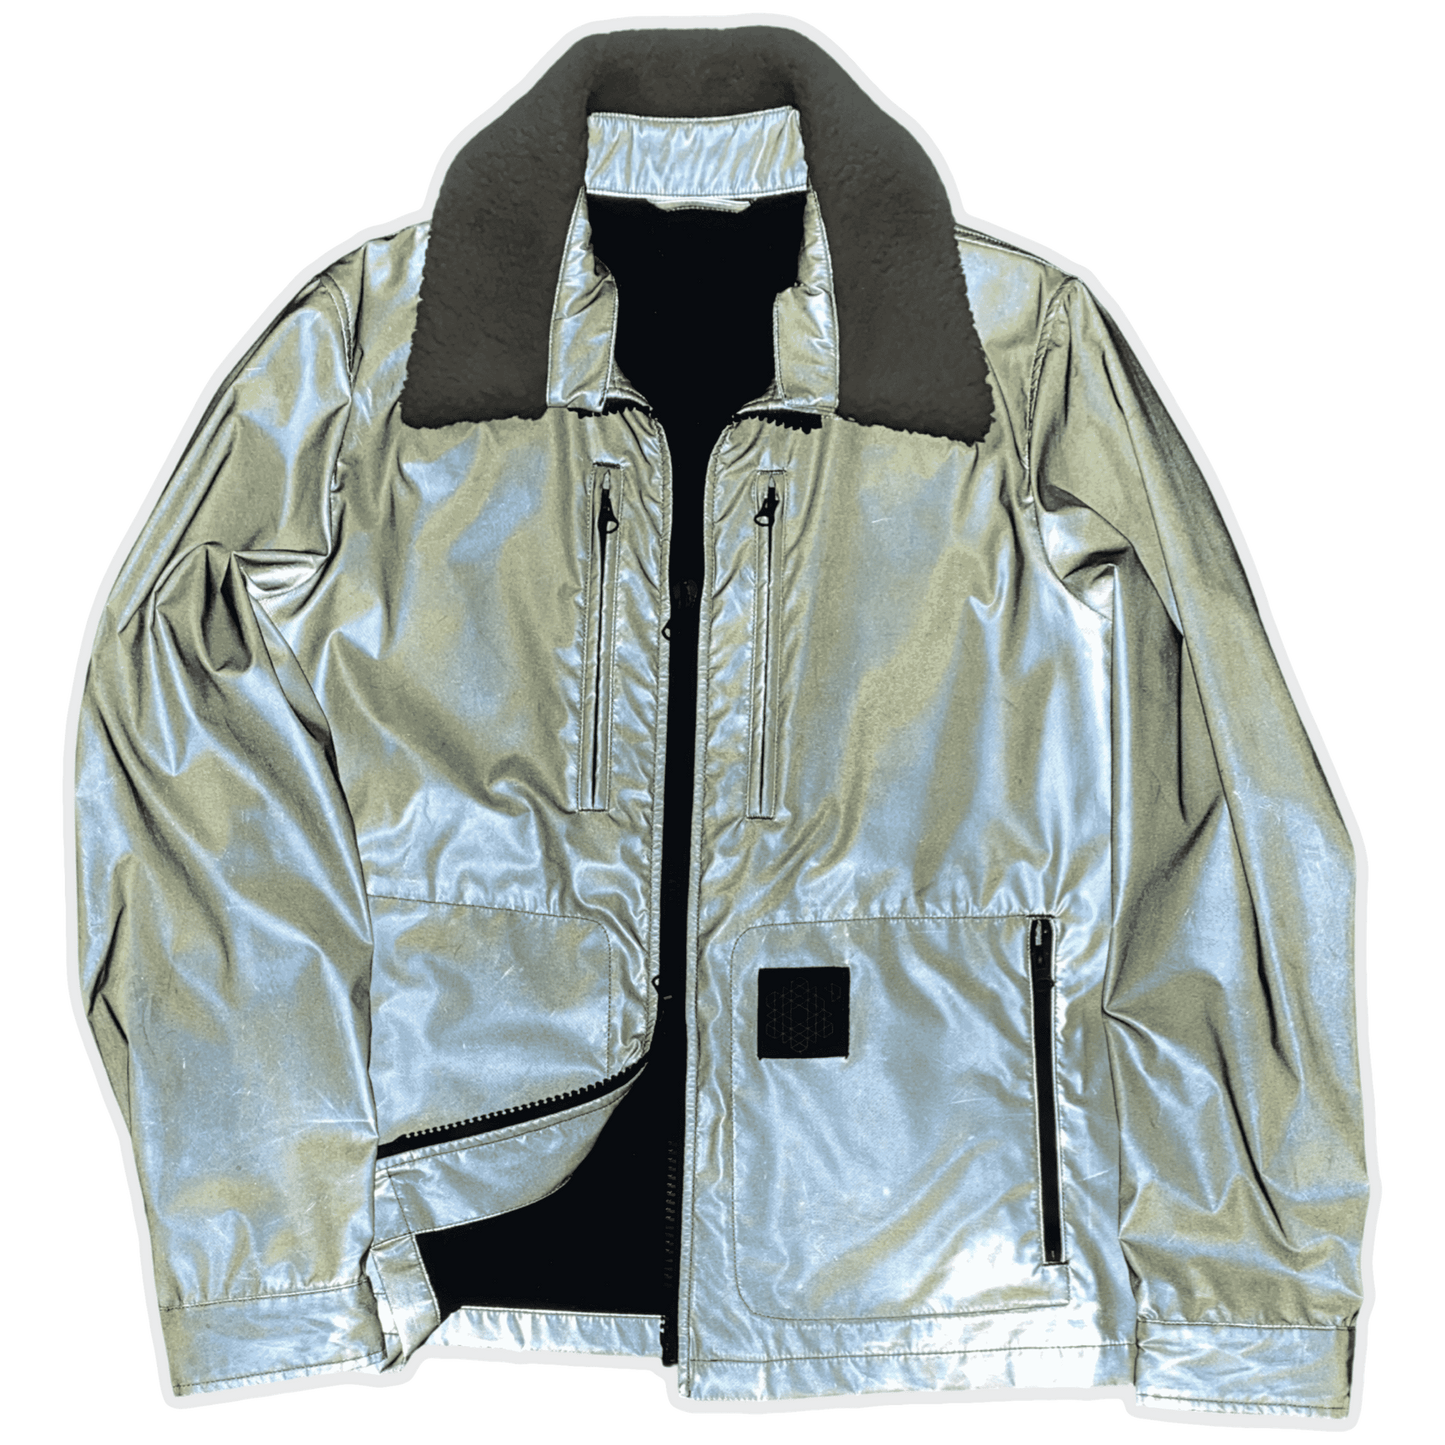 plurimus 2019 no_sx_1r reflective overshirt jacket